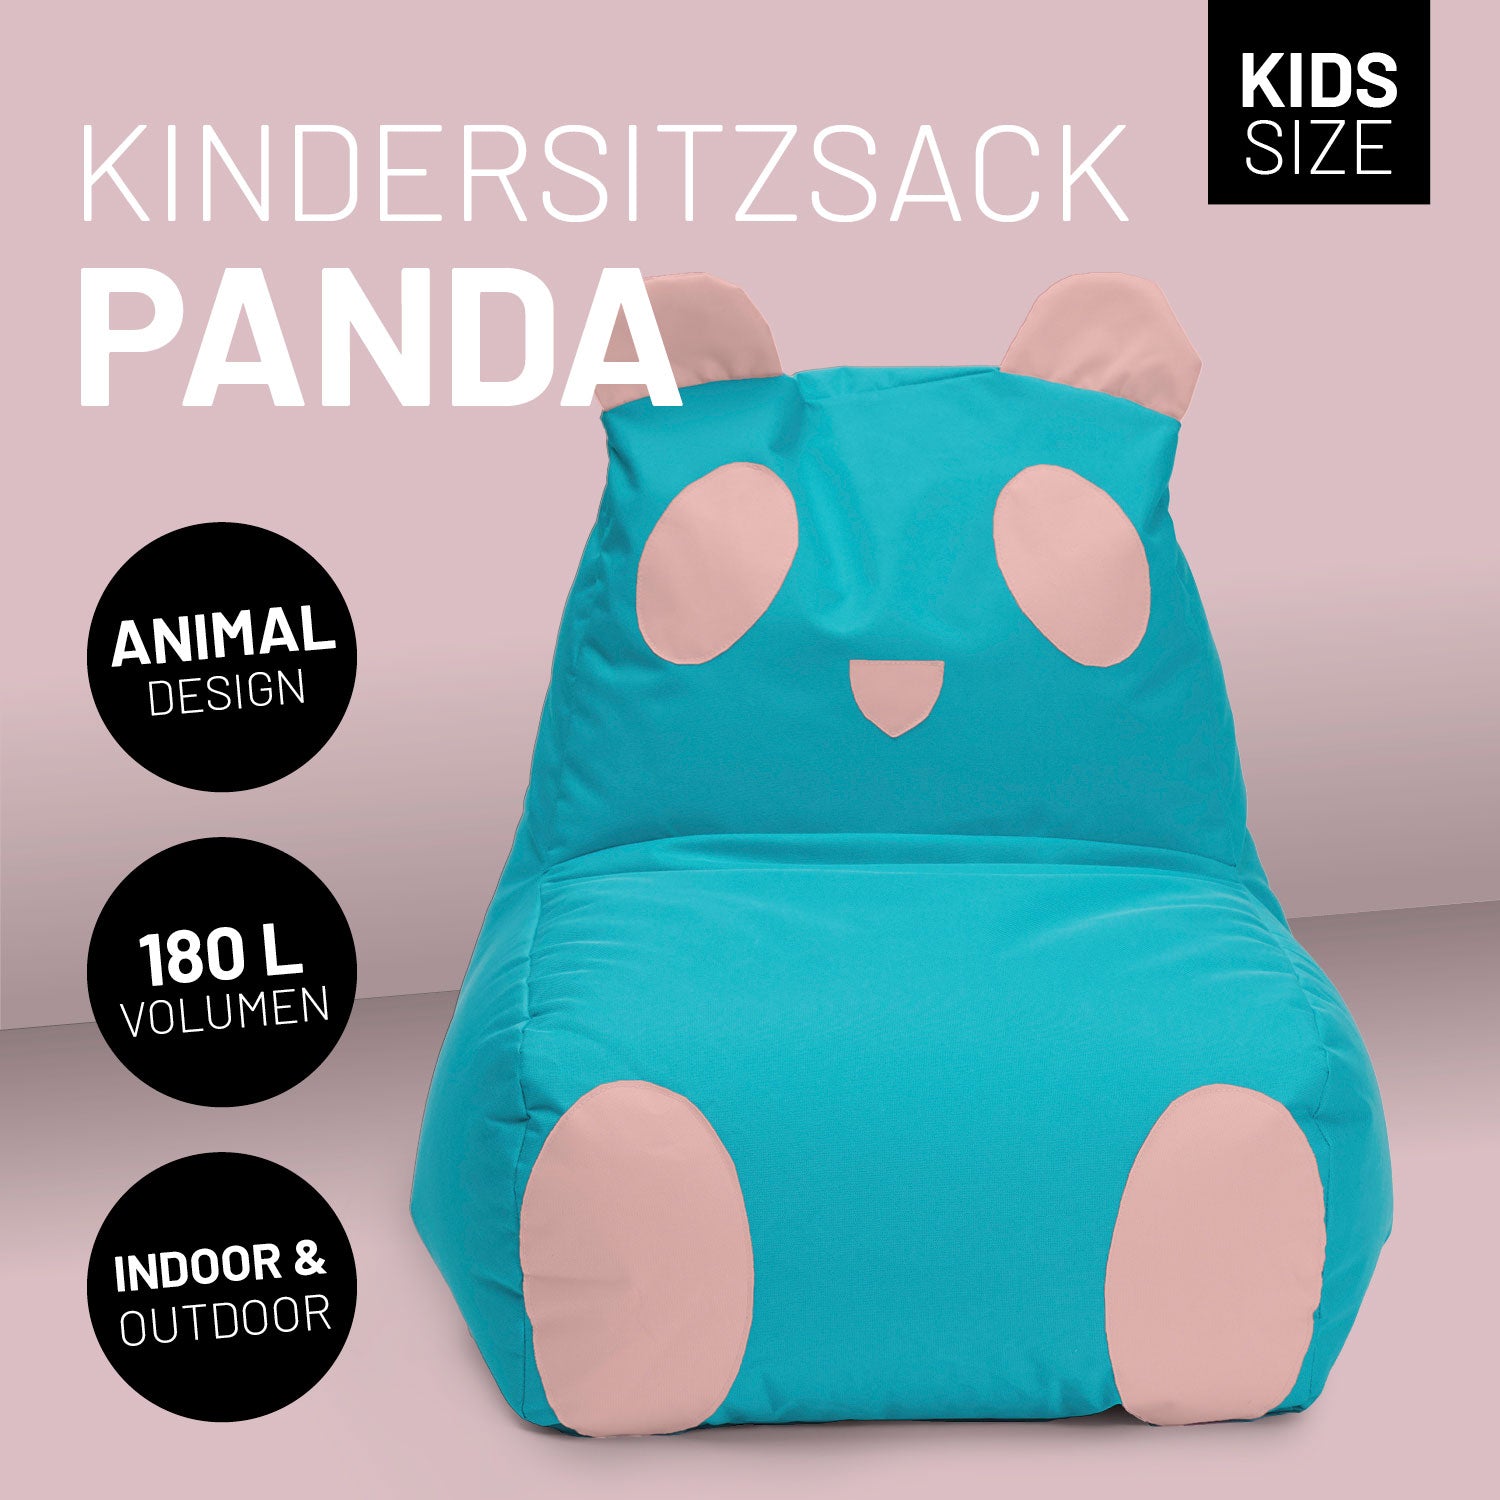 LUMALAND Kindersitzsack Animal Line Panda - Türkis/Pastell Pink